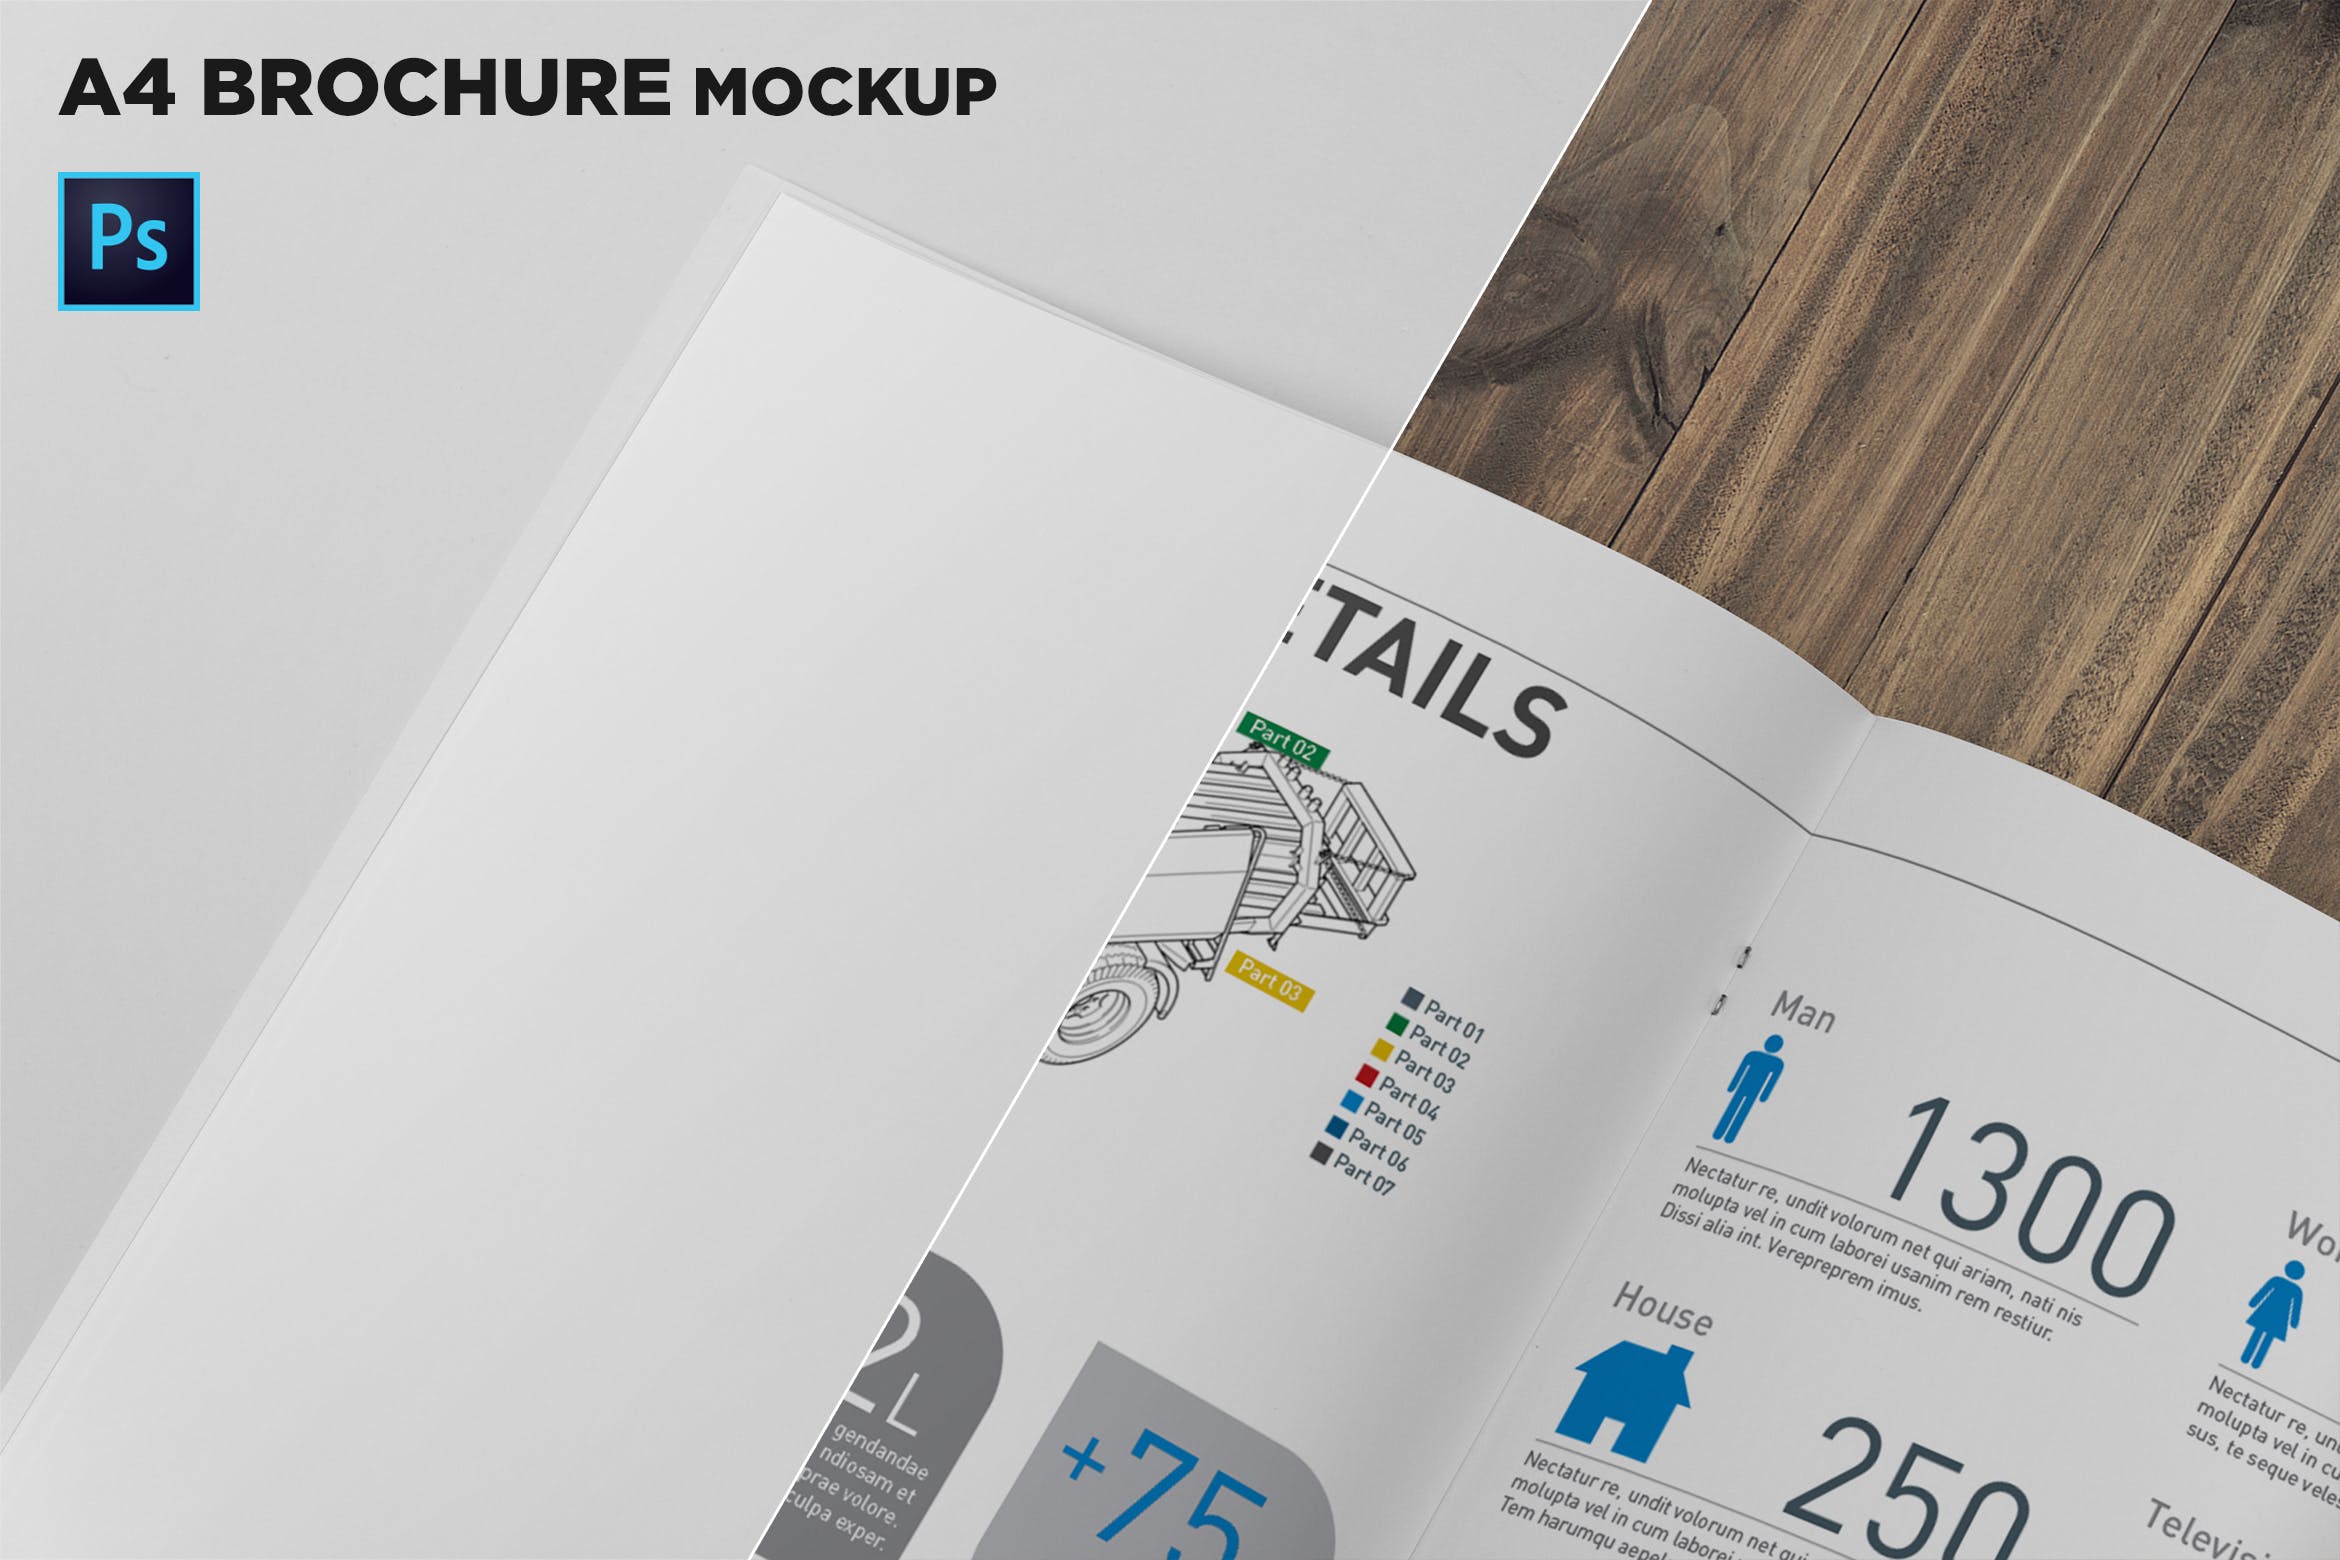 A4尺寸企业/品牌宣传册内页特写样机16图库精选模板 A4 Brochure Page Closeup Mockup插图